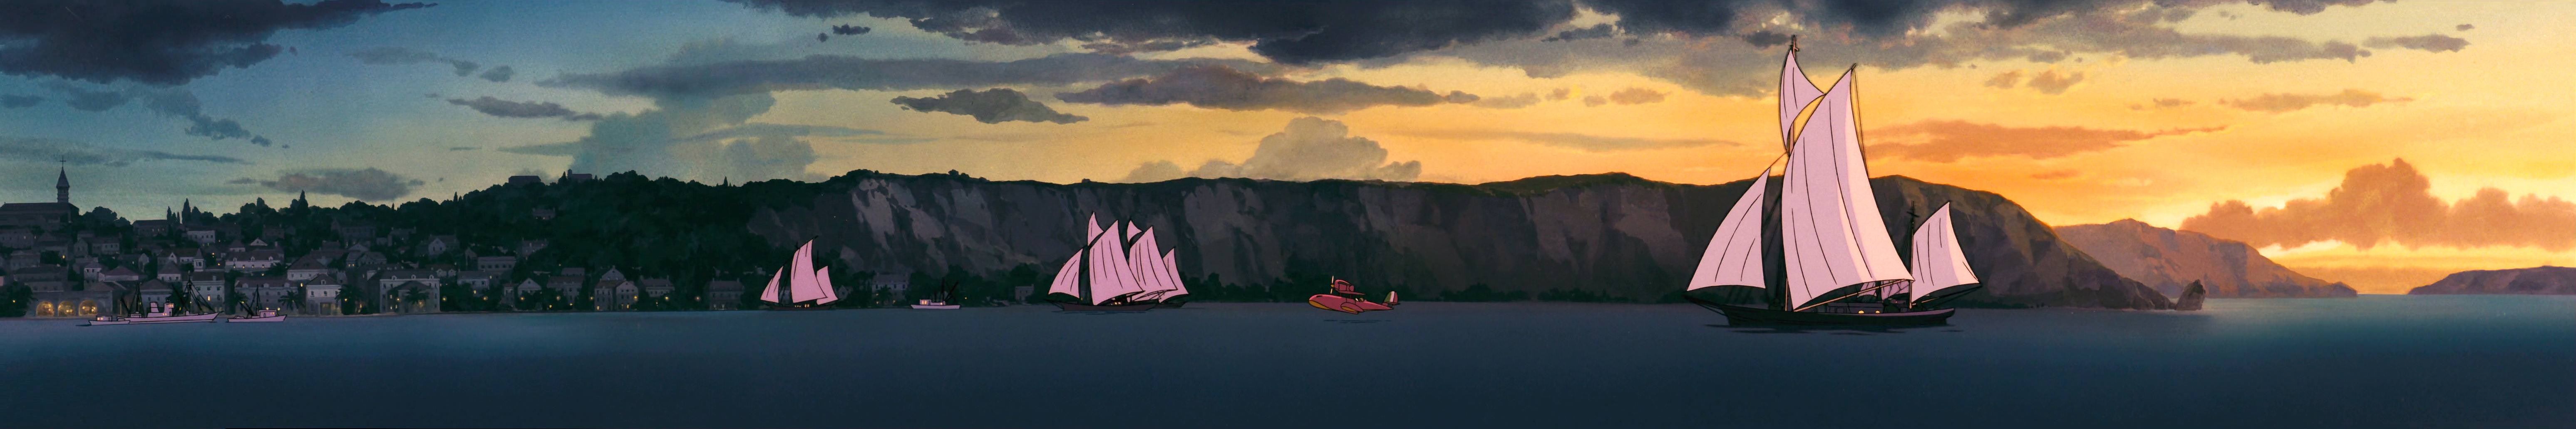 Studio Ghibli, anime, sky, cloud - sky, panoramic, sunset, water